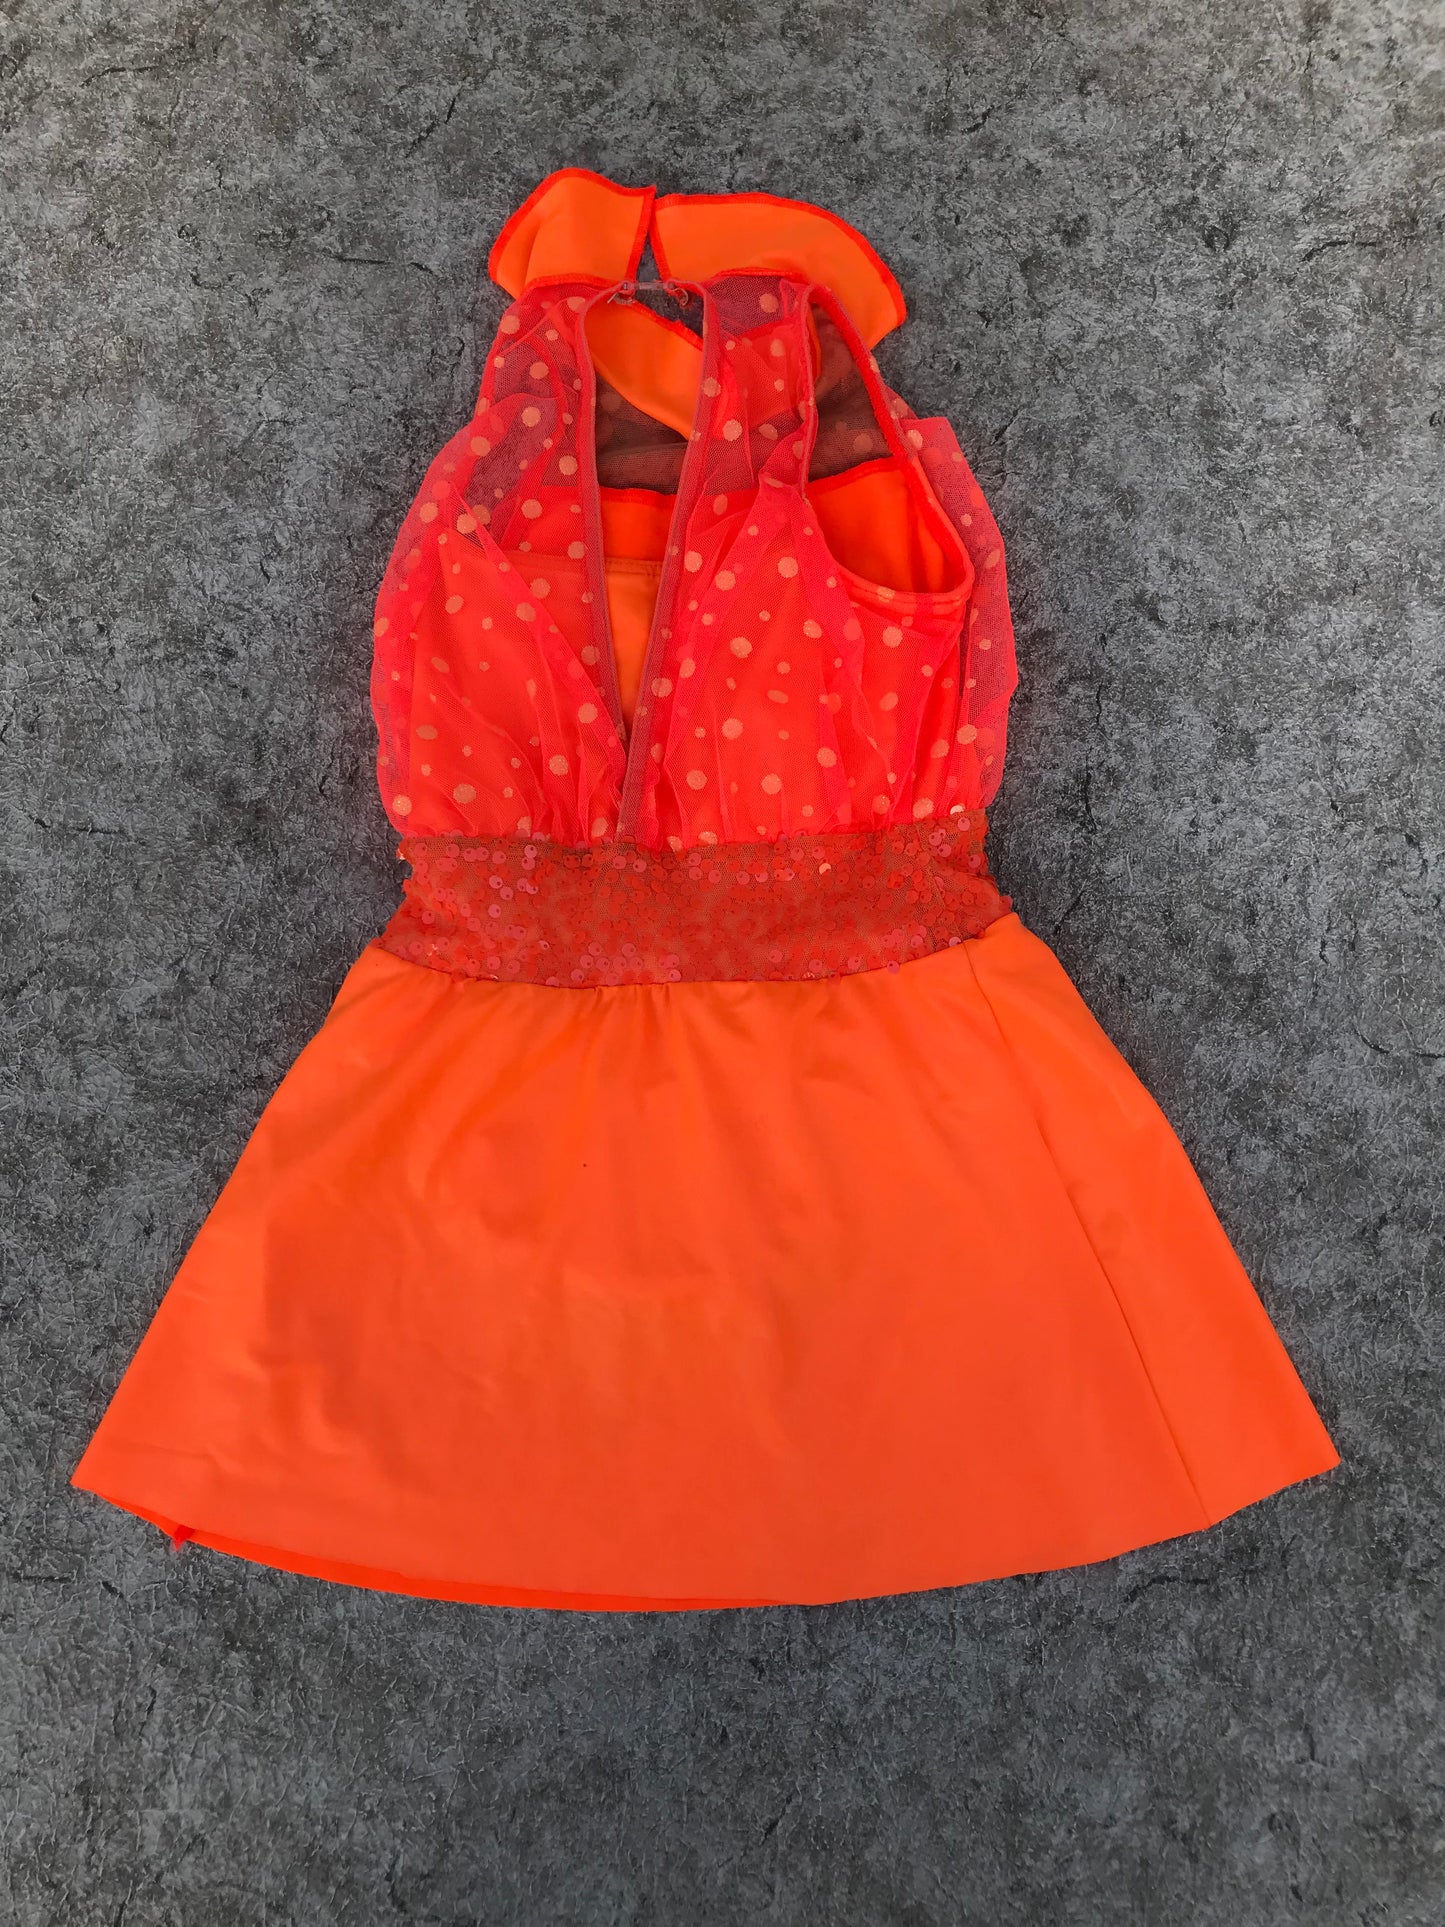 Figure Skating Dress Child Size 8-10 Tangerine As New MM 8014